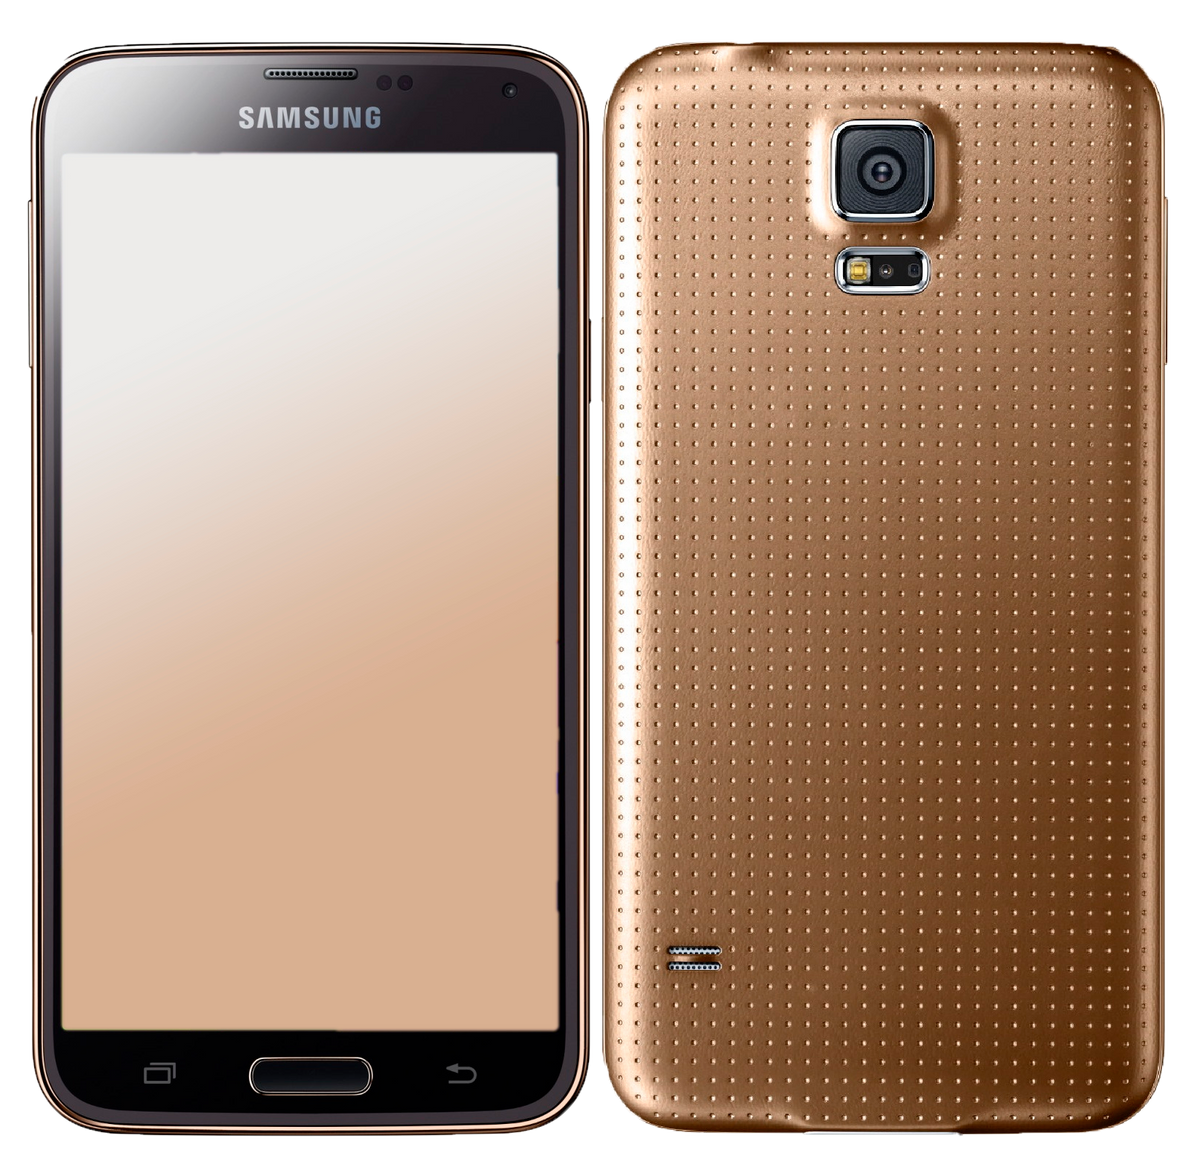 Samsung Galaxy s5 16 GB gold - Ohne Vertrag